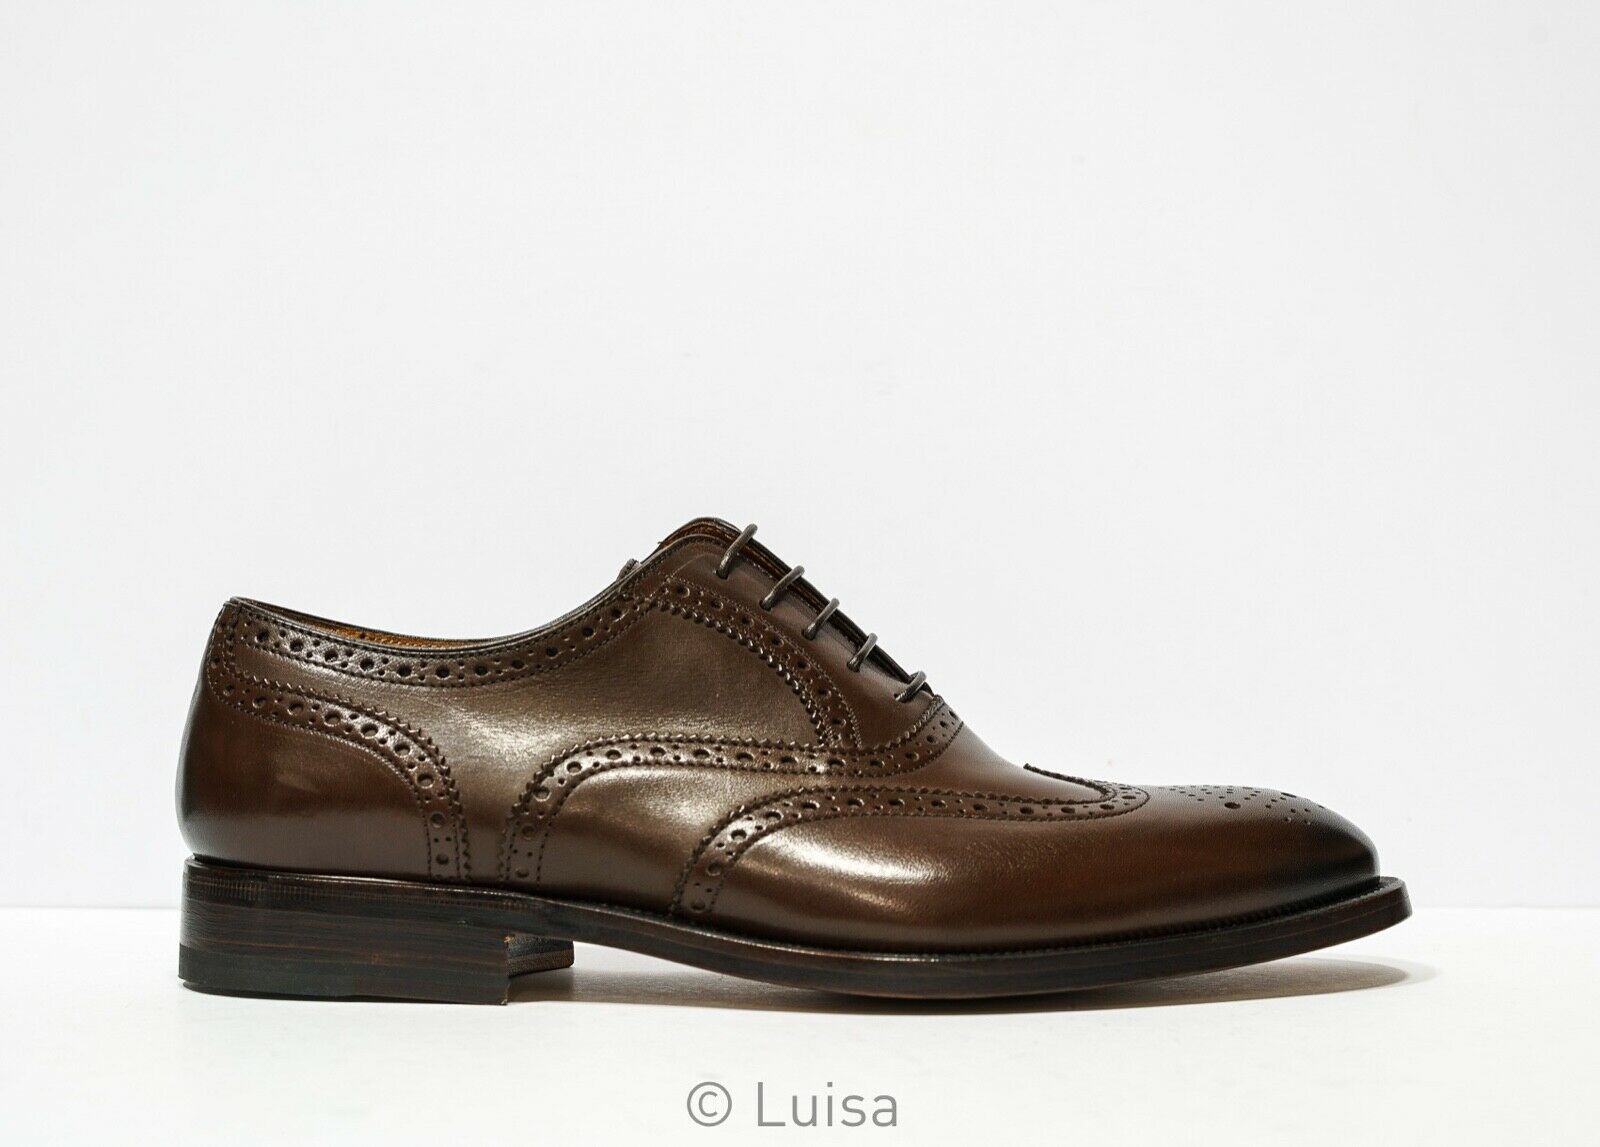 Moreschi Men's Marrone Leather Detail Shoe 037096